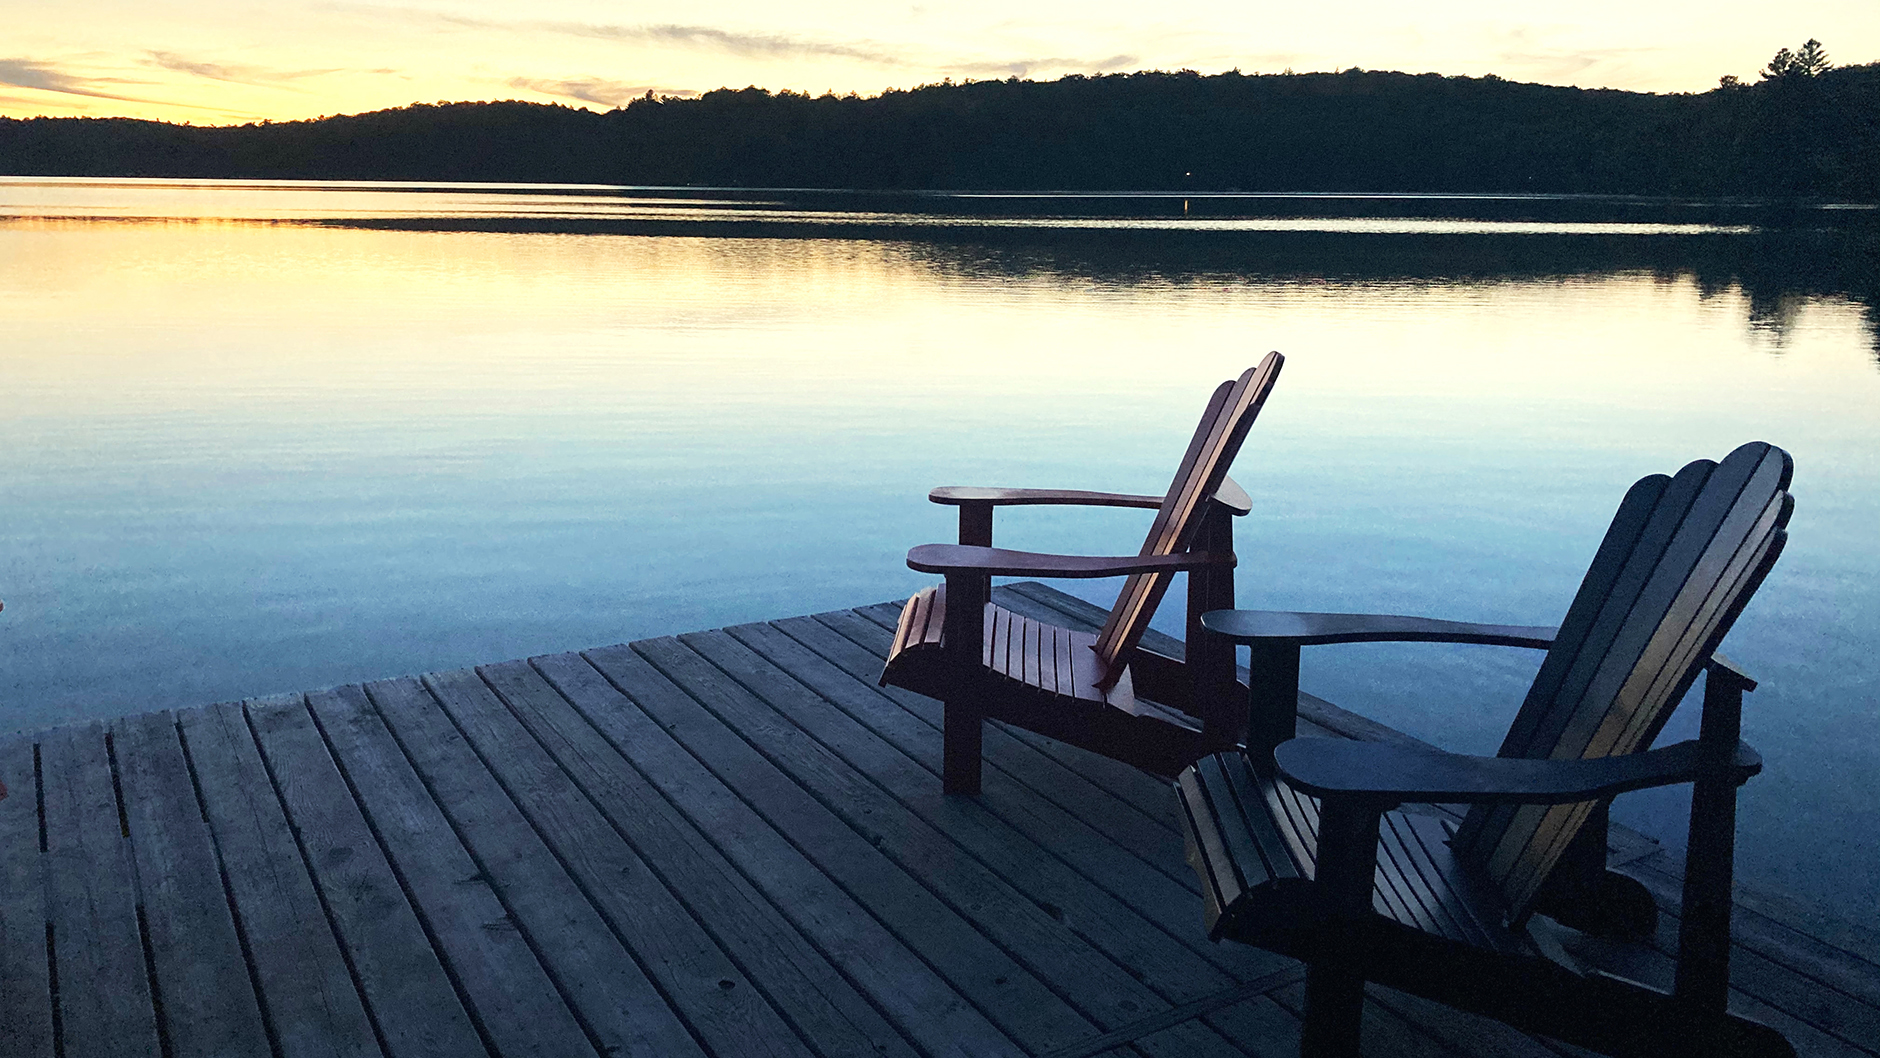 Adirondack chairs on deck beside calm lake at sunrise